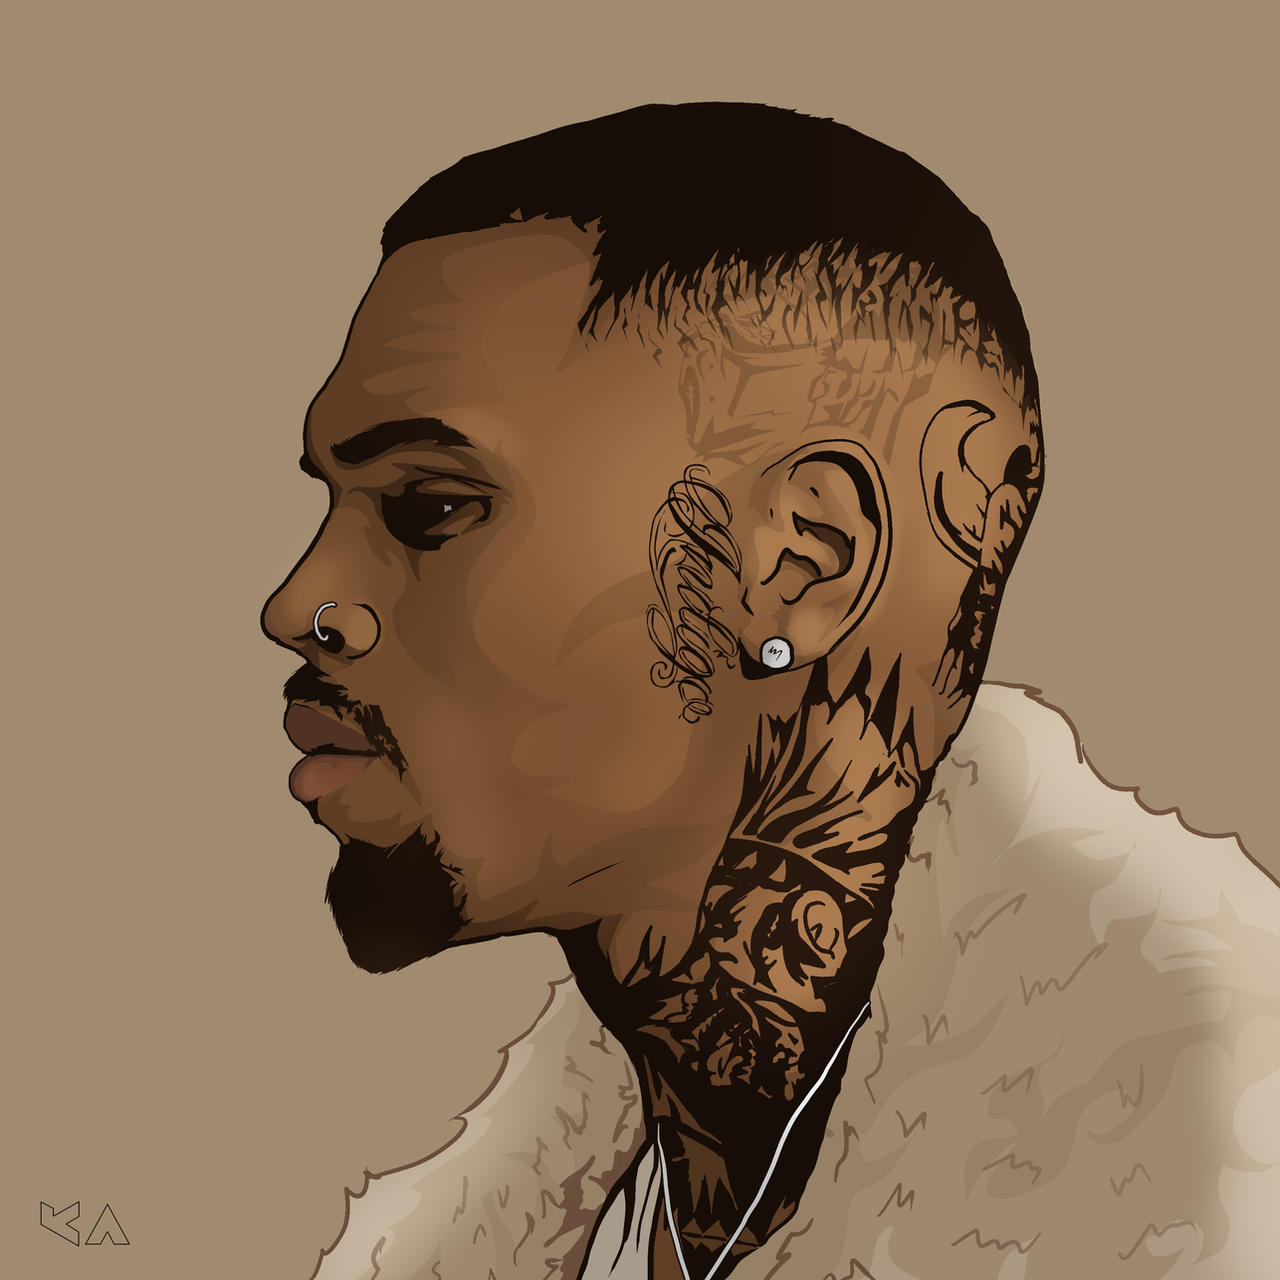 Chris Brown aka Breezy by ARTbyKLARTI on DeviantArt